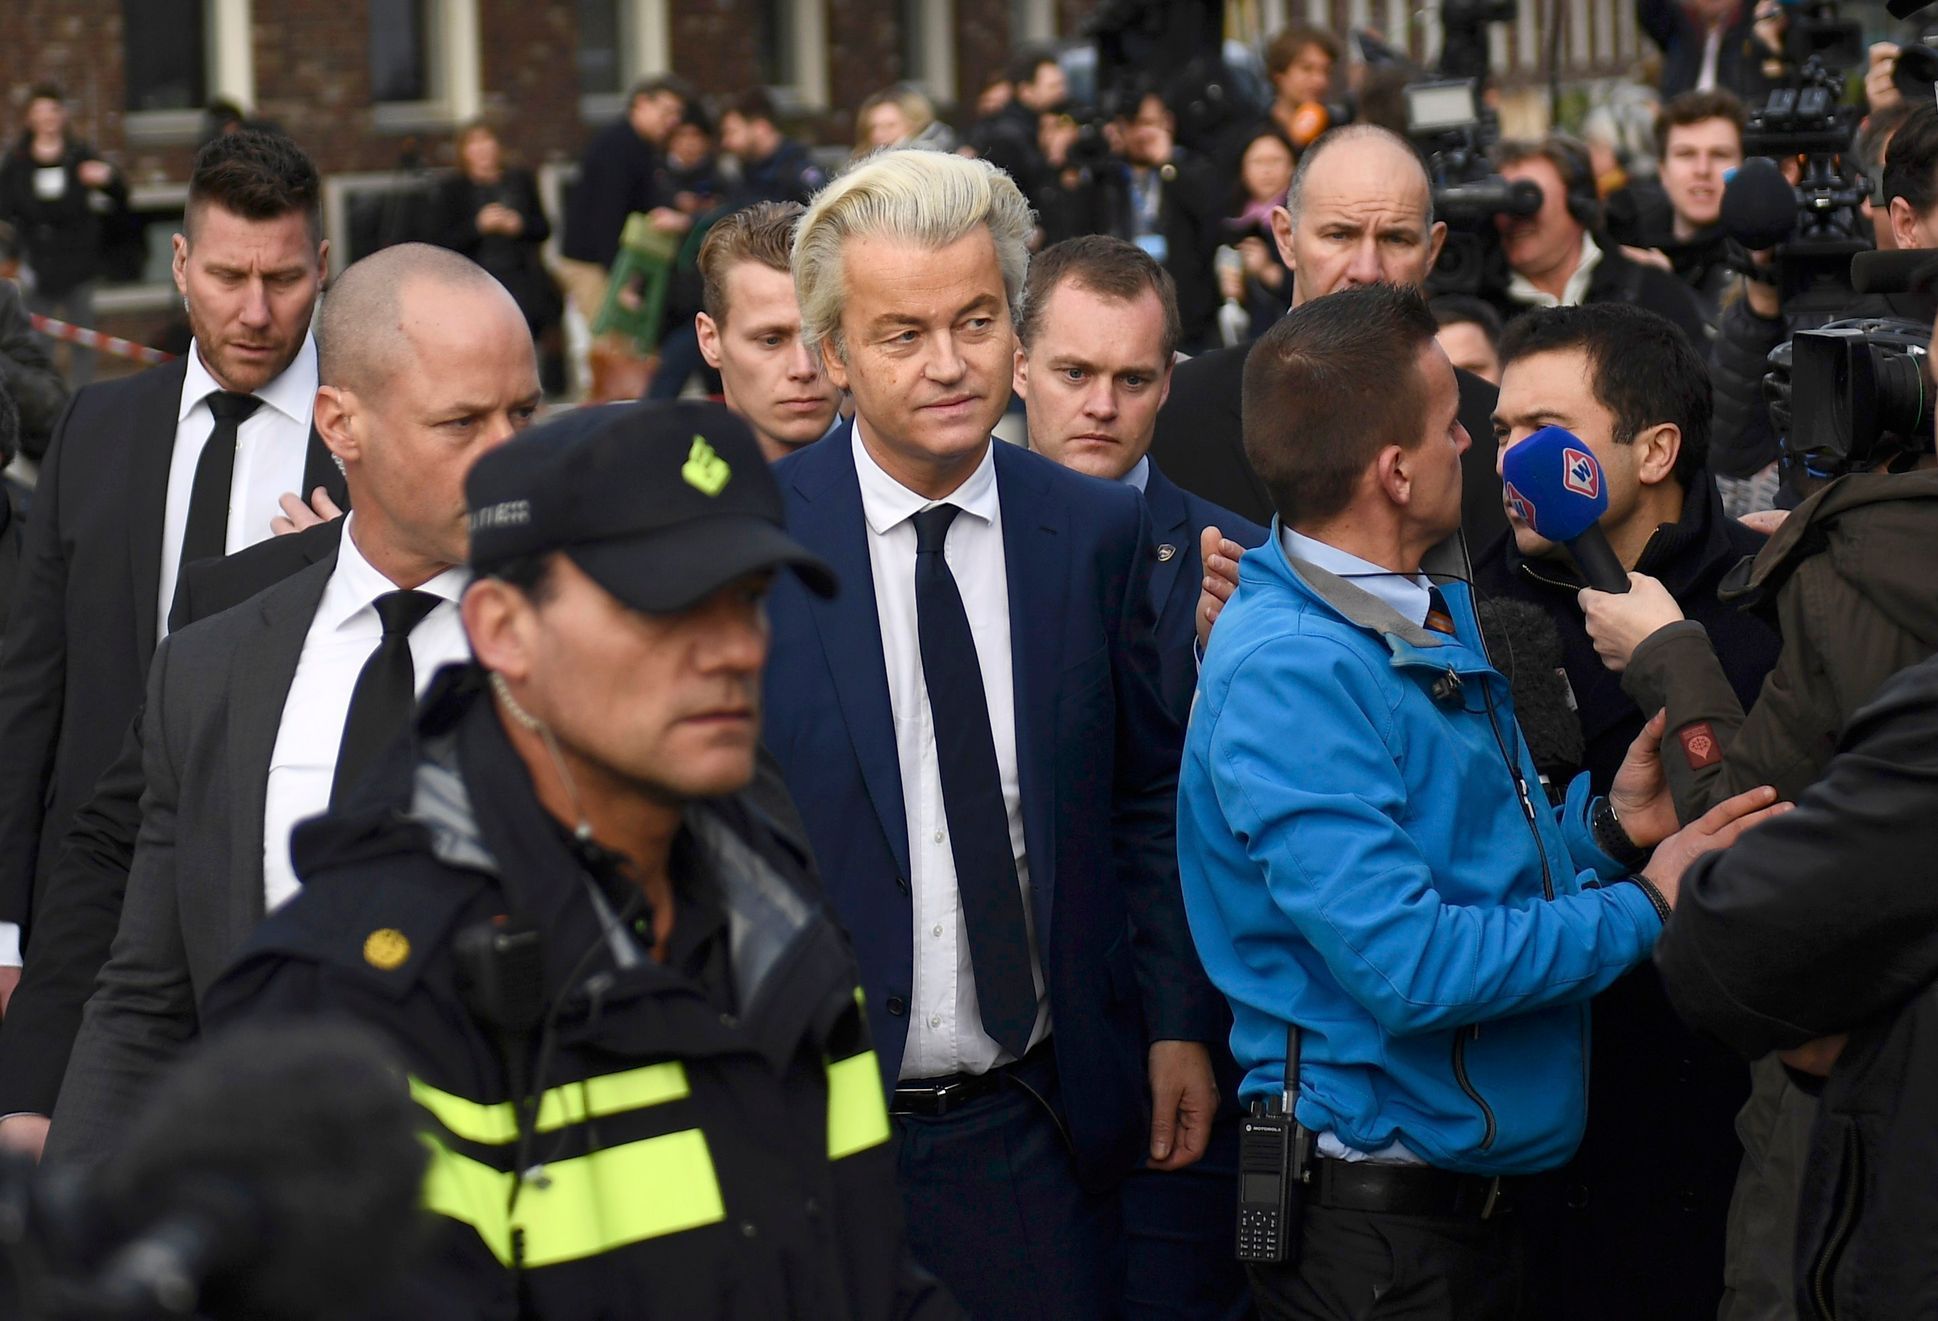 Nizozemsko volby, Geert Wilders